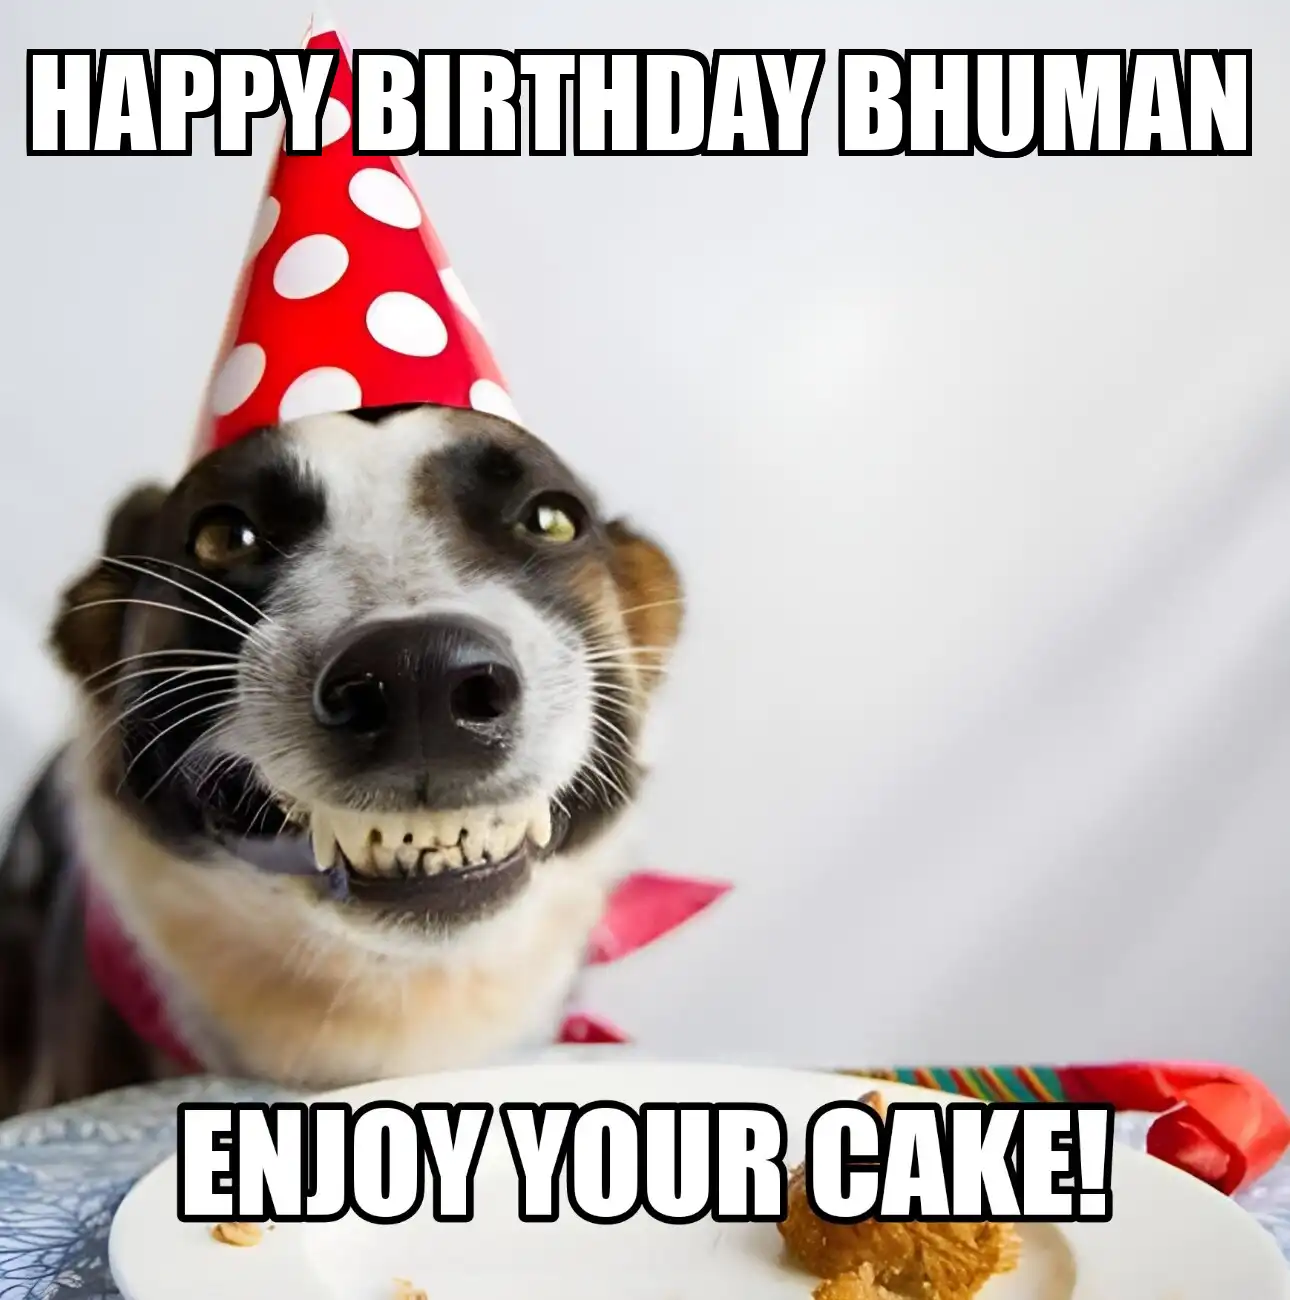 Happy Birthday Bhuman Enjoy Your Cake Dog Meme